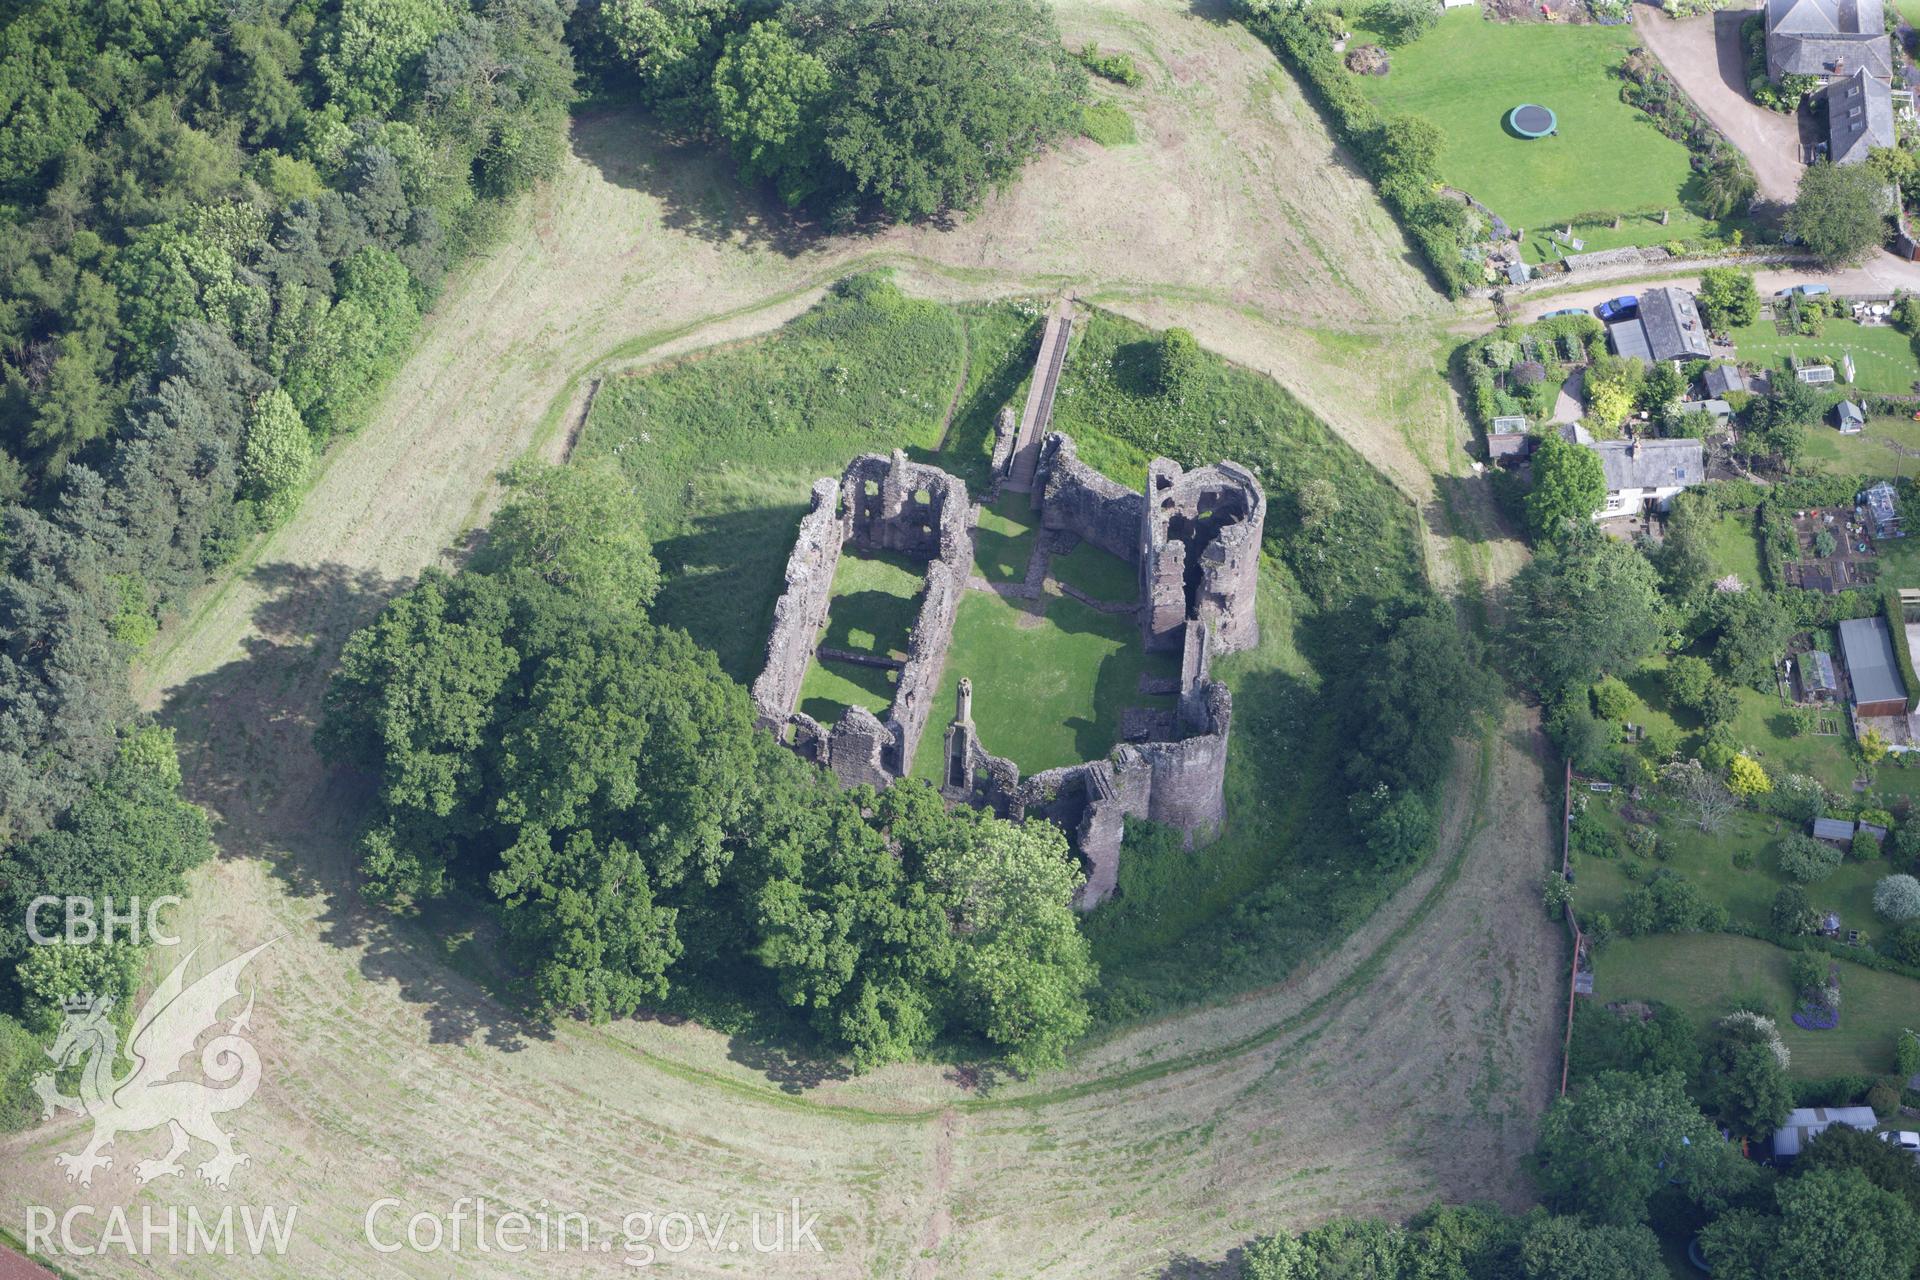 RCAHMW colour oblique aerial photograph of Grosmont Castle. Taken on 11 June 2009 by Toby Driver